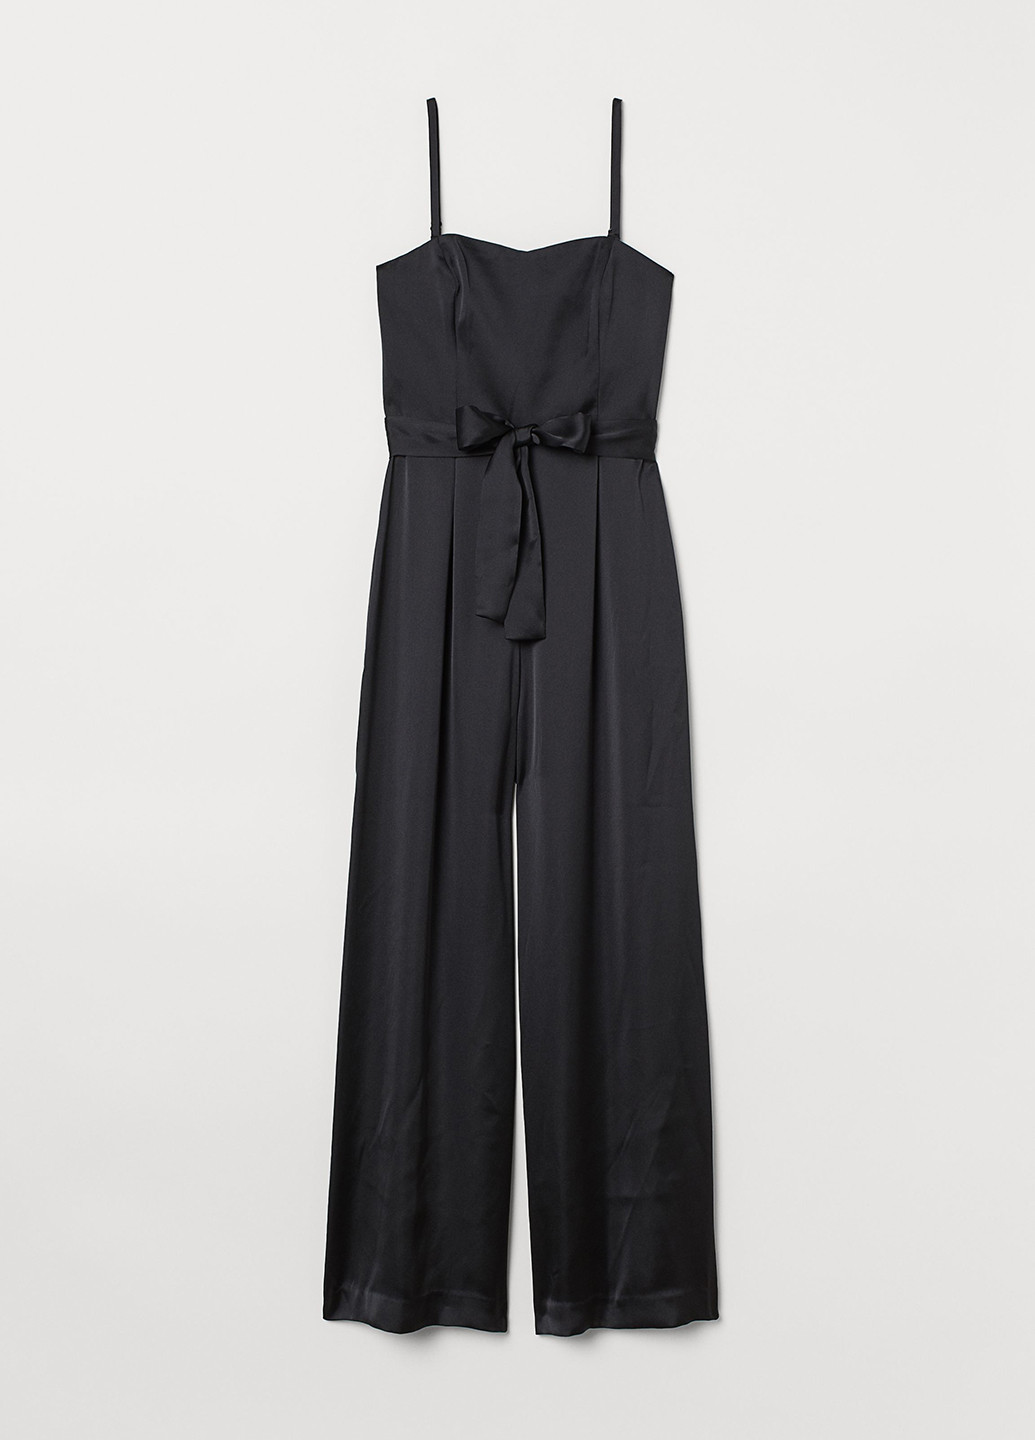 Комбинезон H&M комбинезон-брюки однотонный чёрный кэжуал полиэстер, атлас